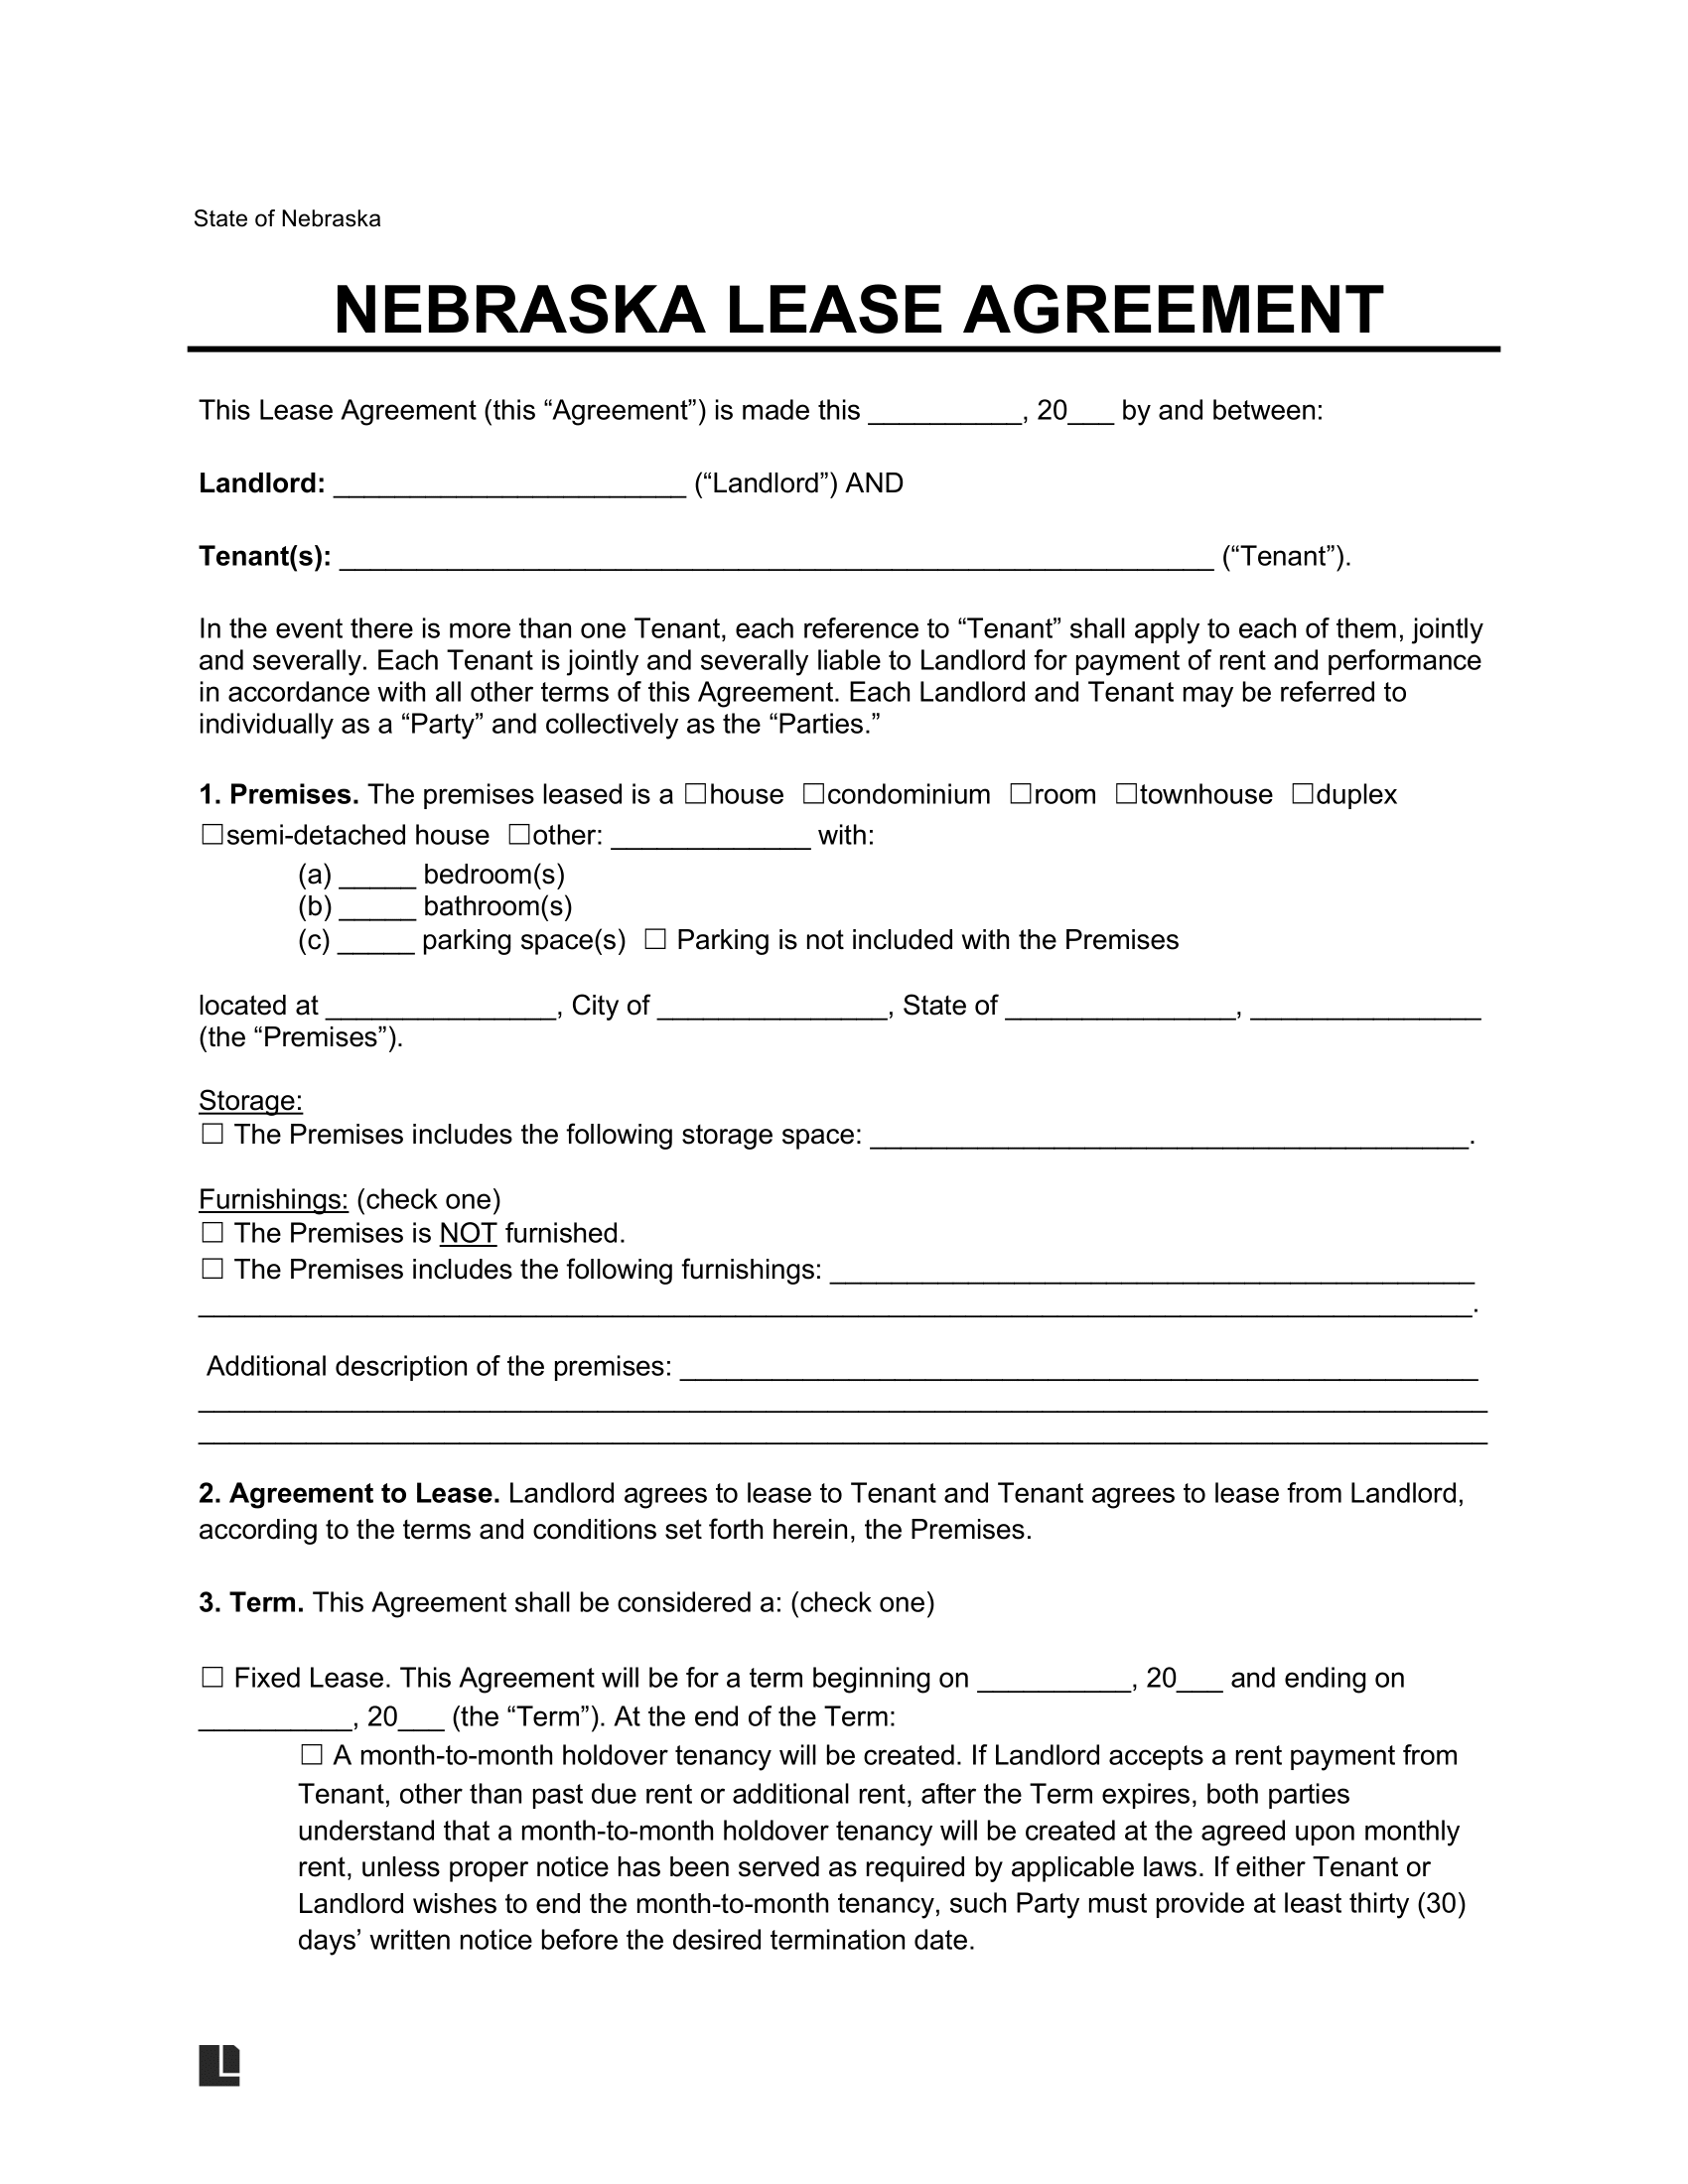 Nebraska Lease Agreement Template